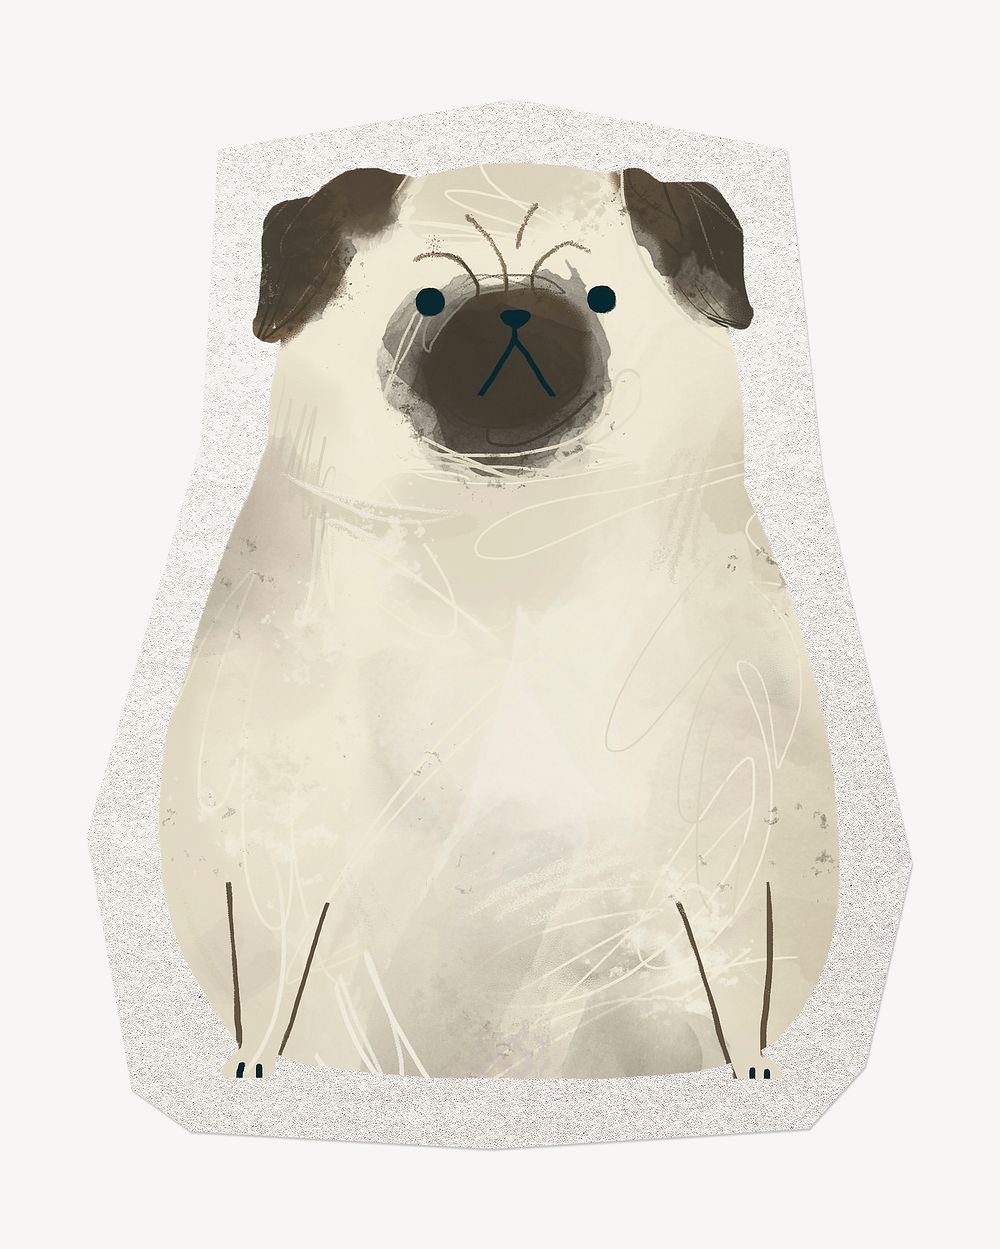 Cute dog, pet animal clipart sticker, paper craft collage element